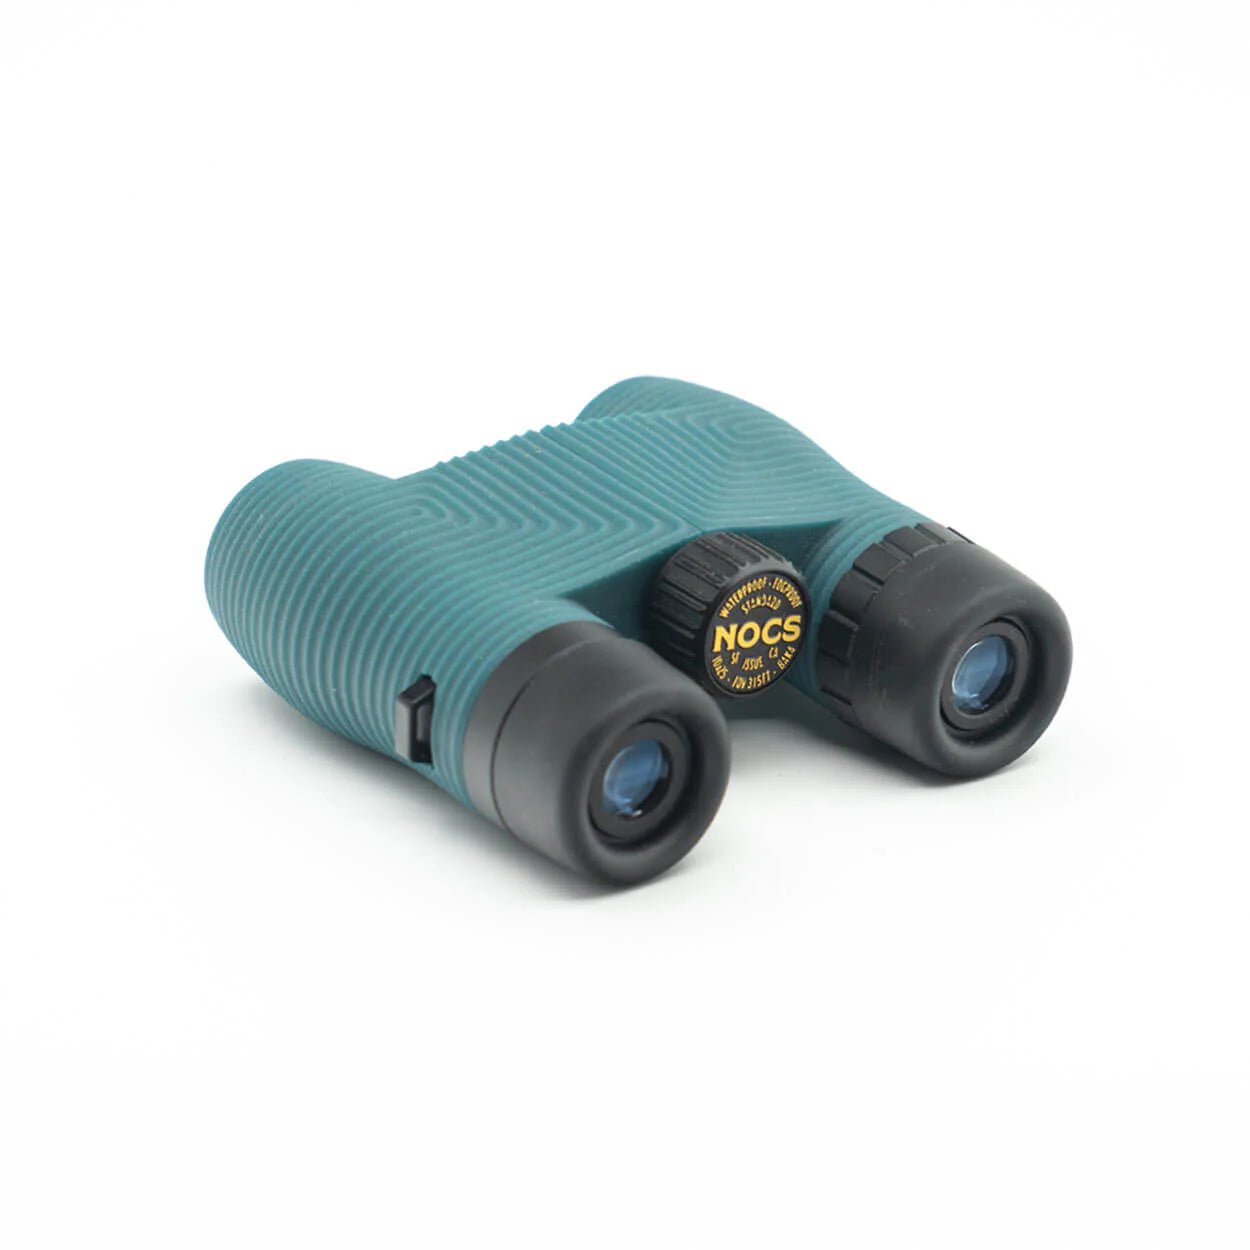 Standard Issue Waterproof Binoculars 10x25 - Pacific Blue